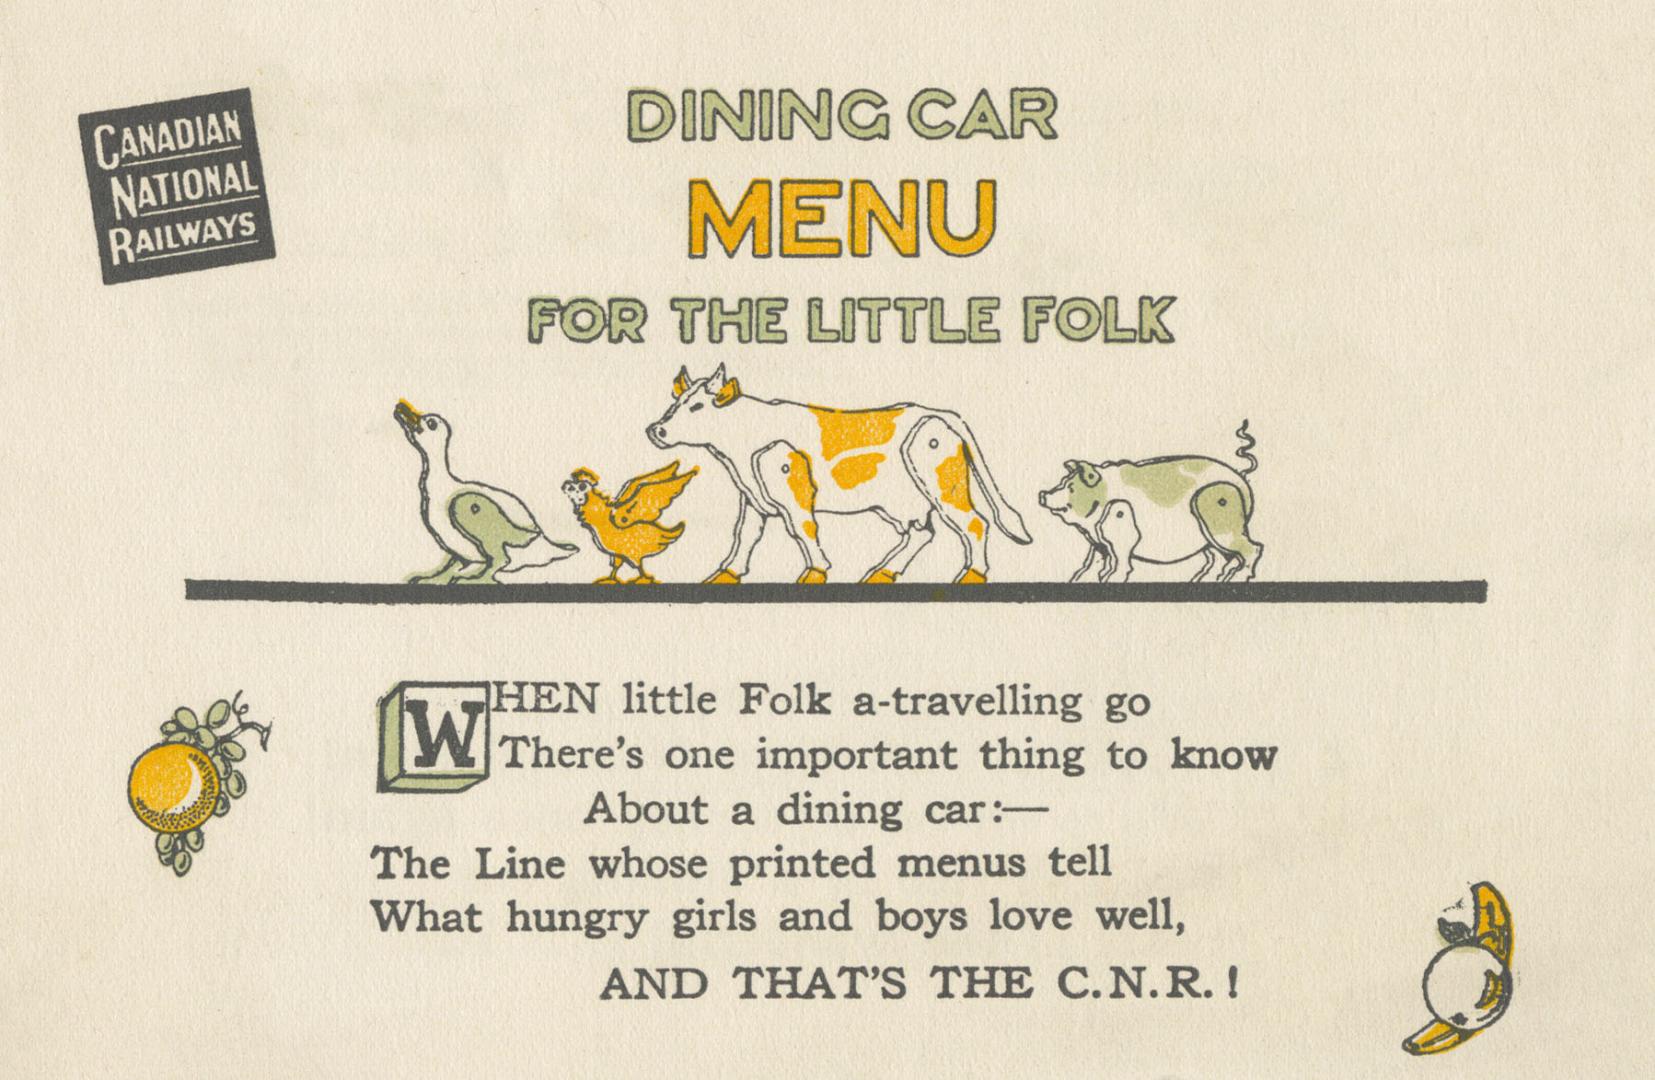 Dining car menu for the little folk